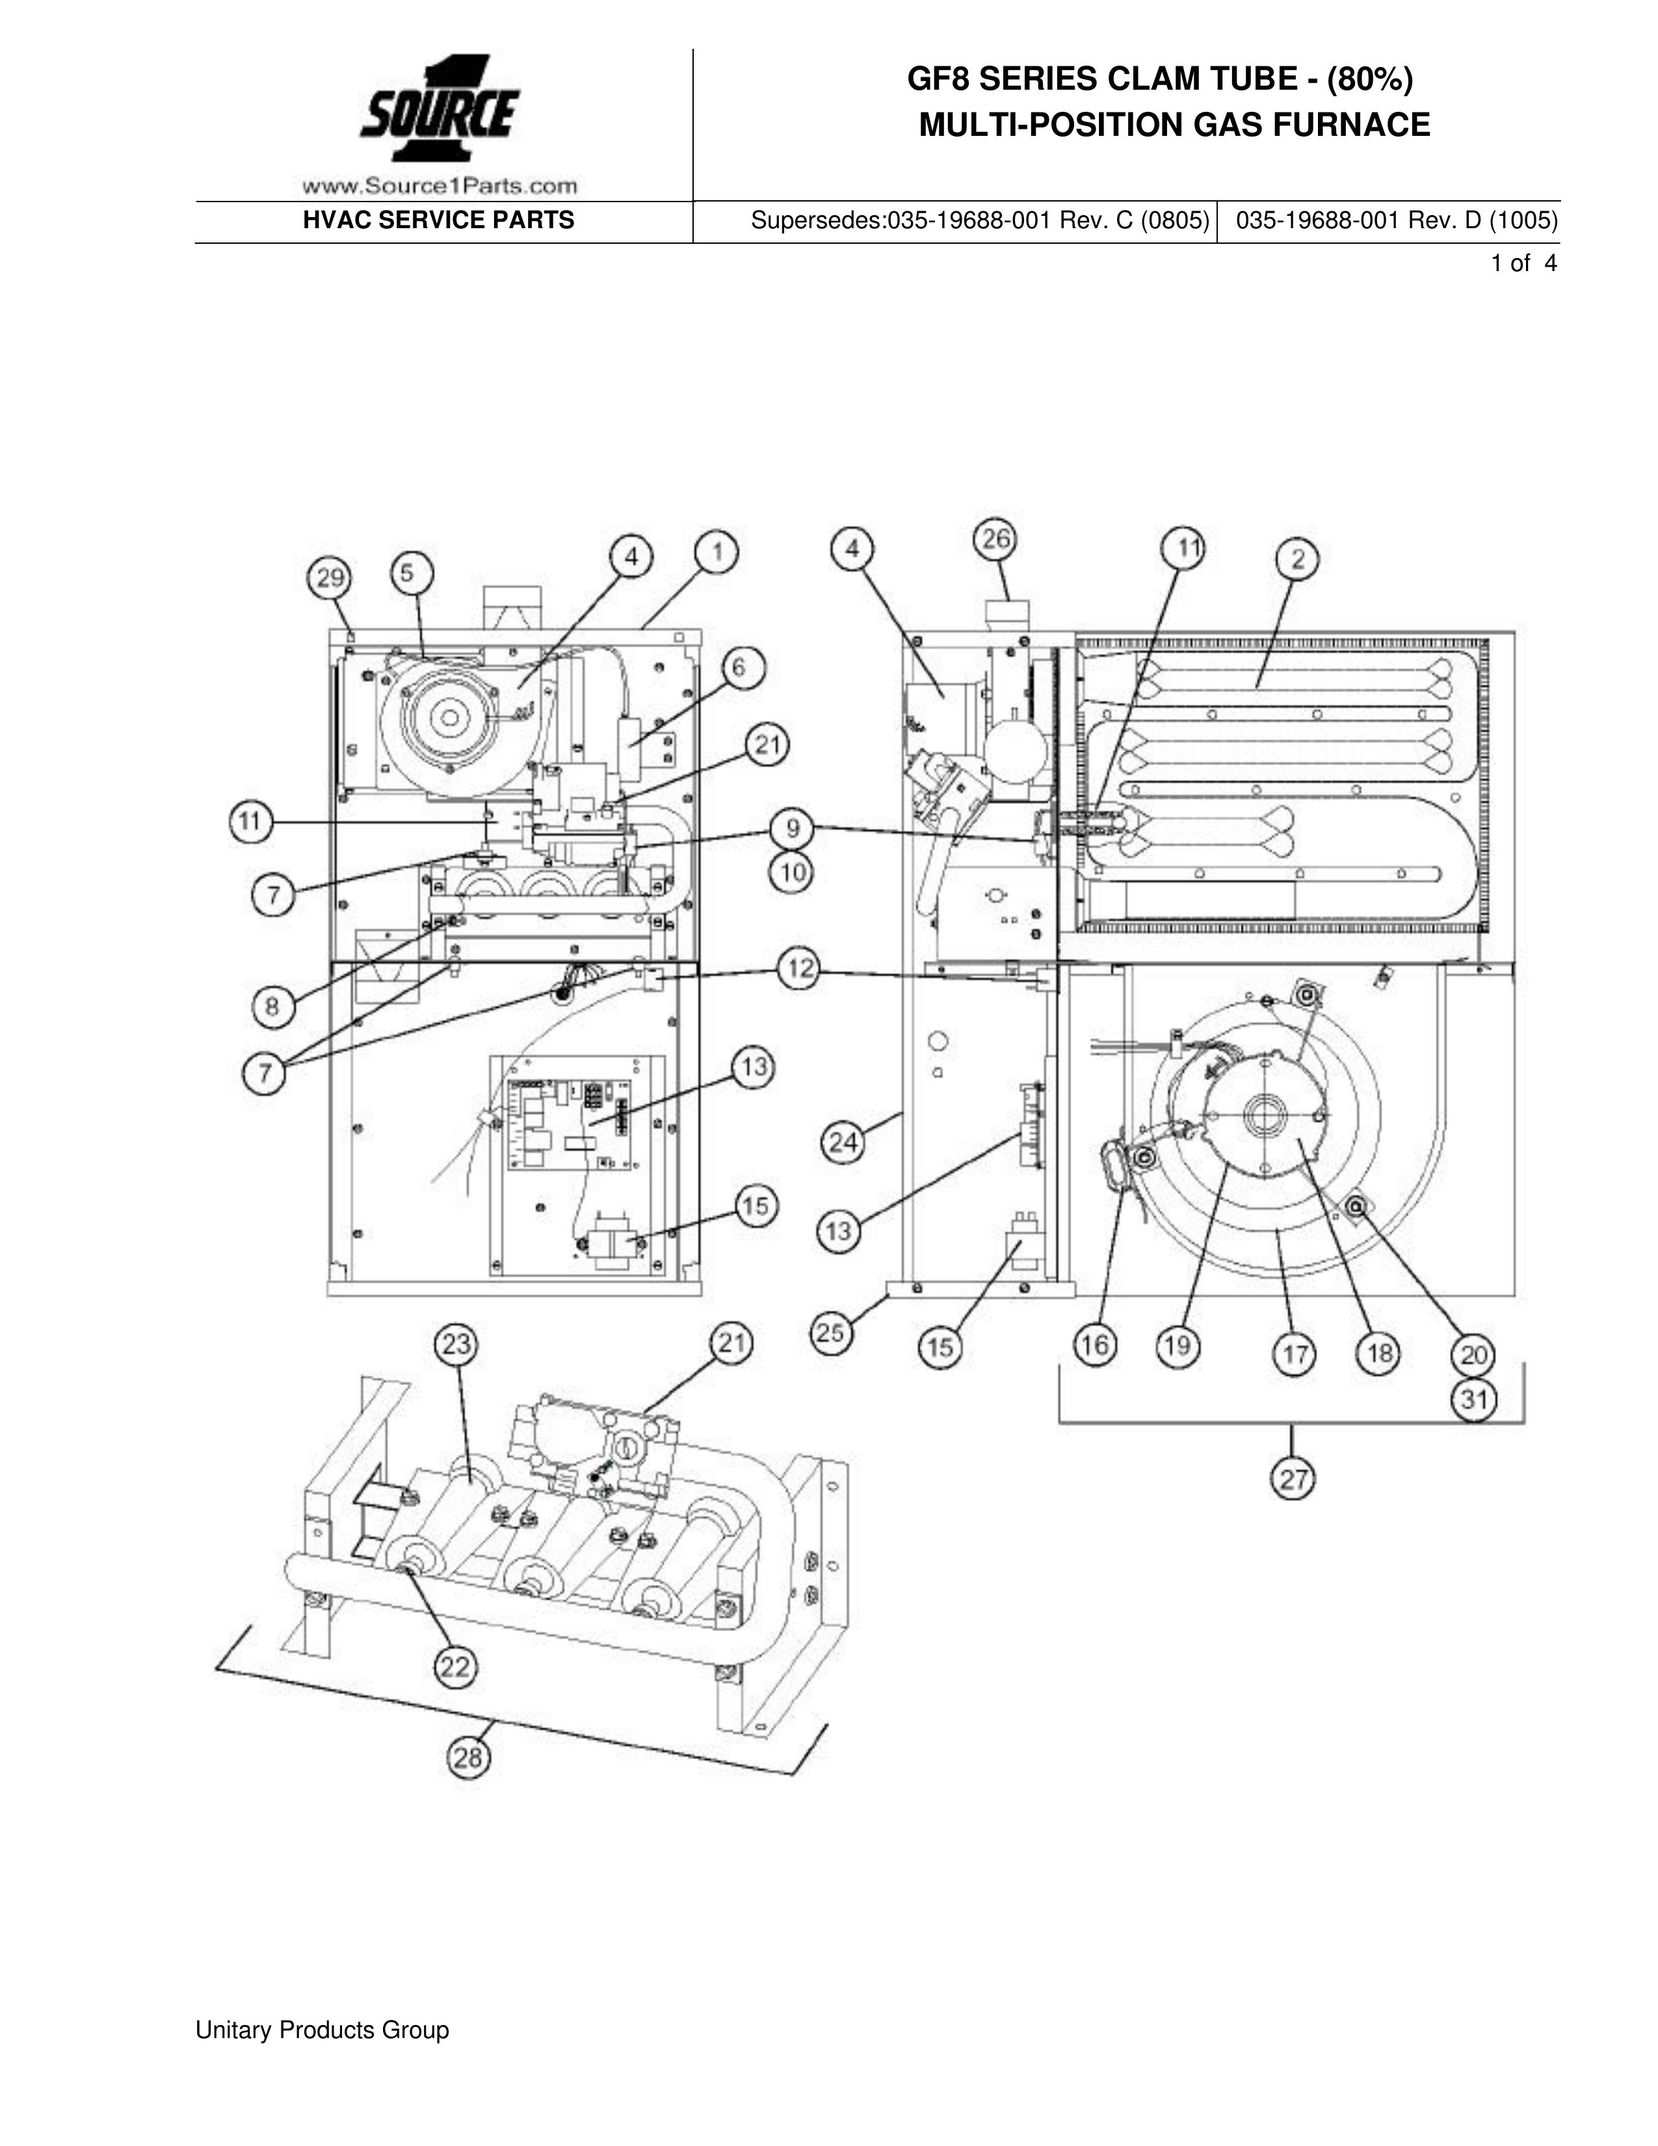 AirComm Corporation 7516 Furnace User Manual